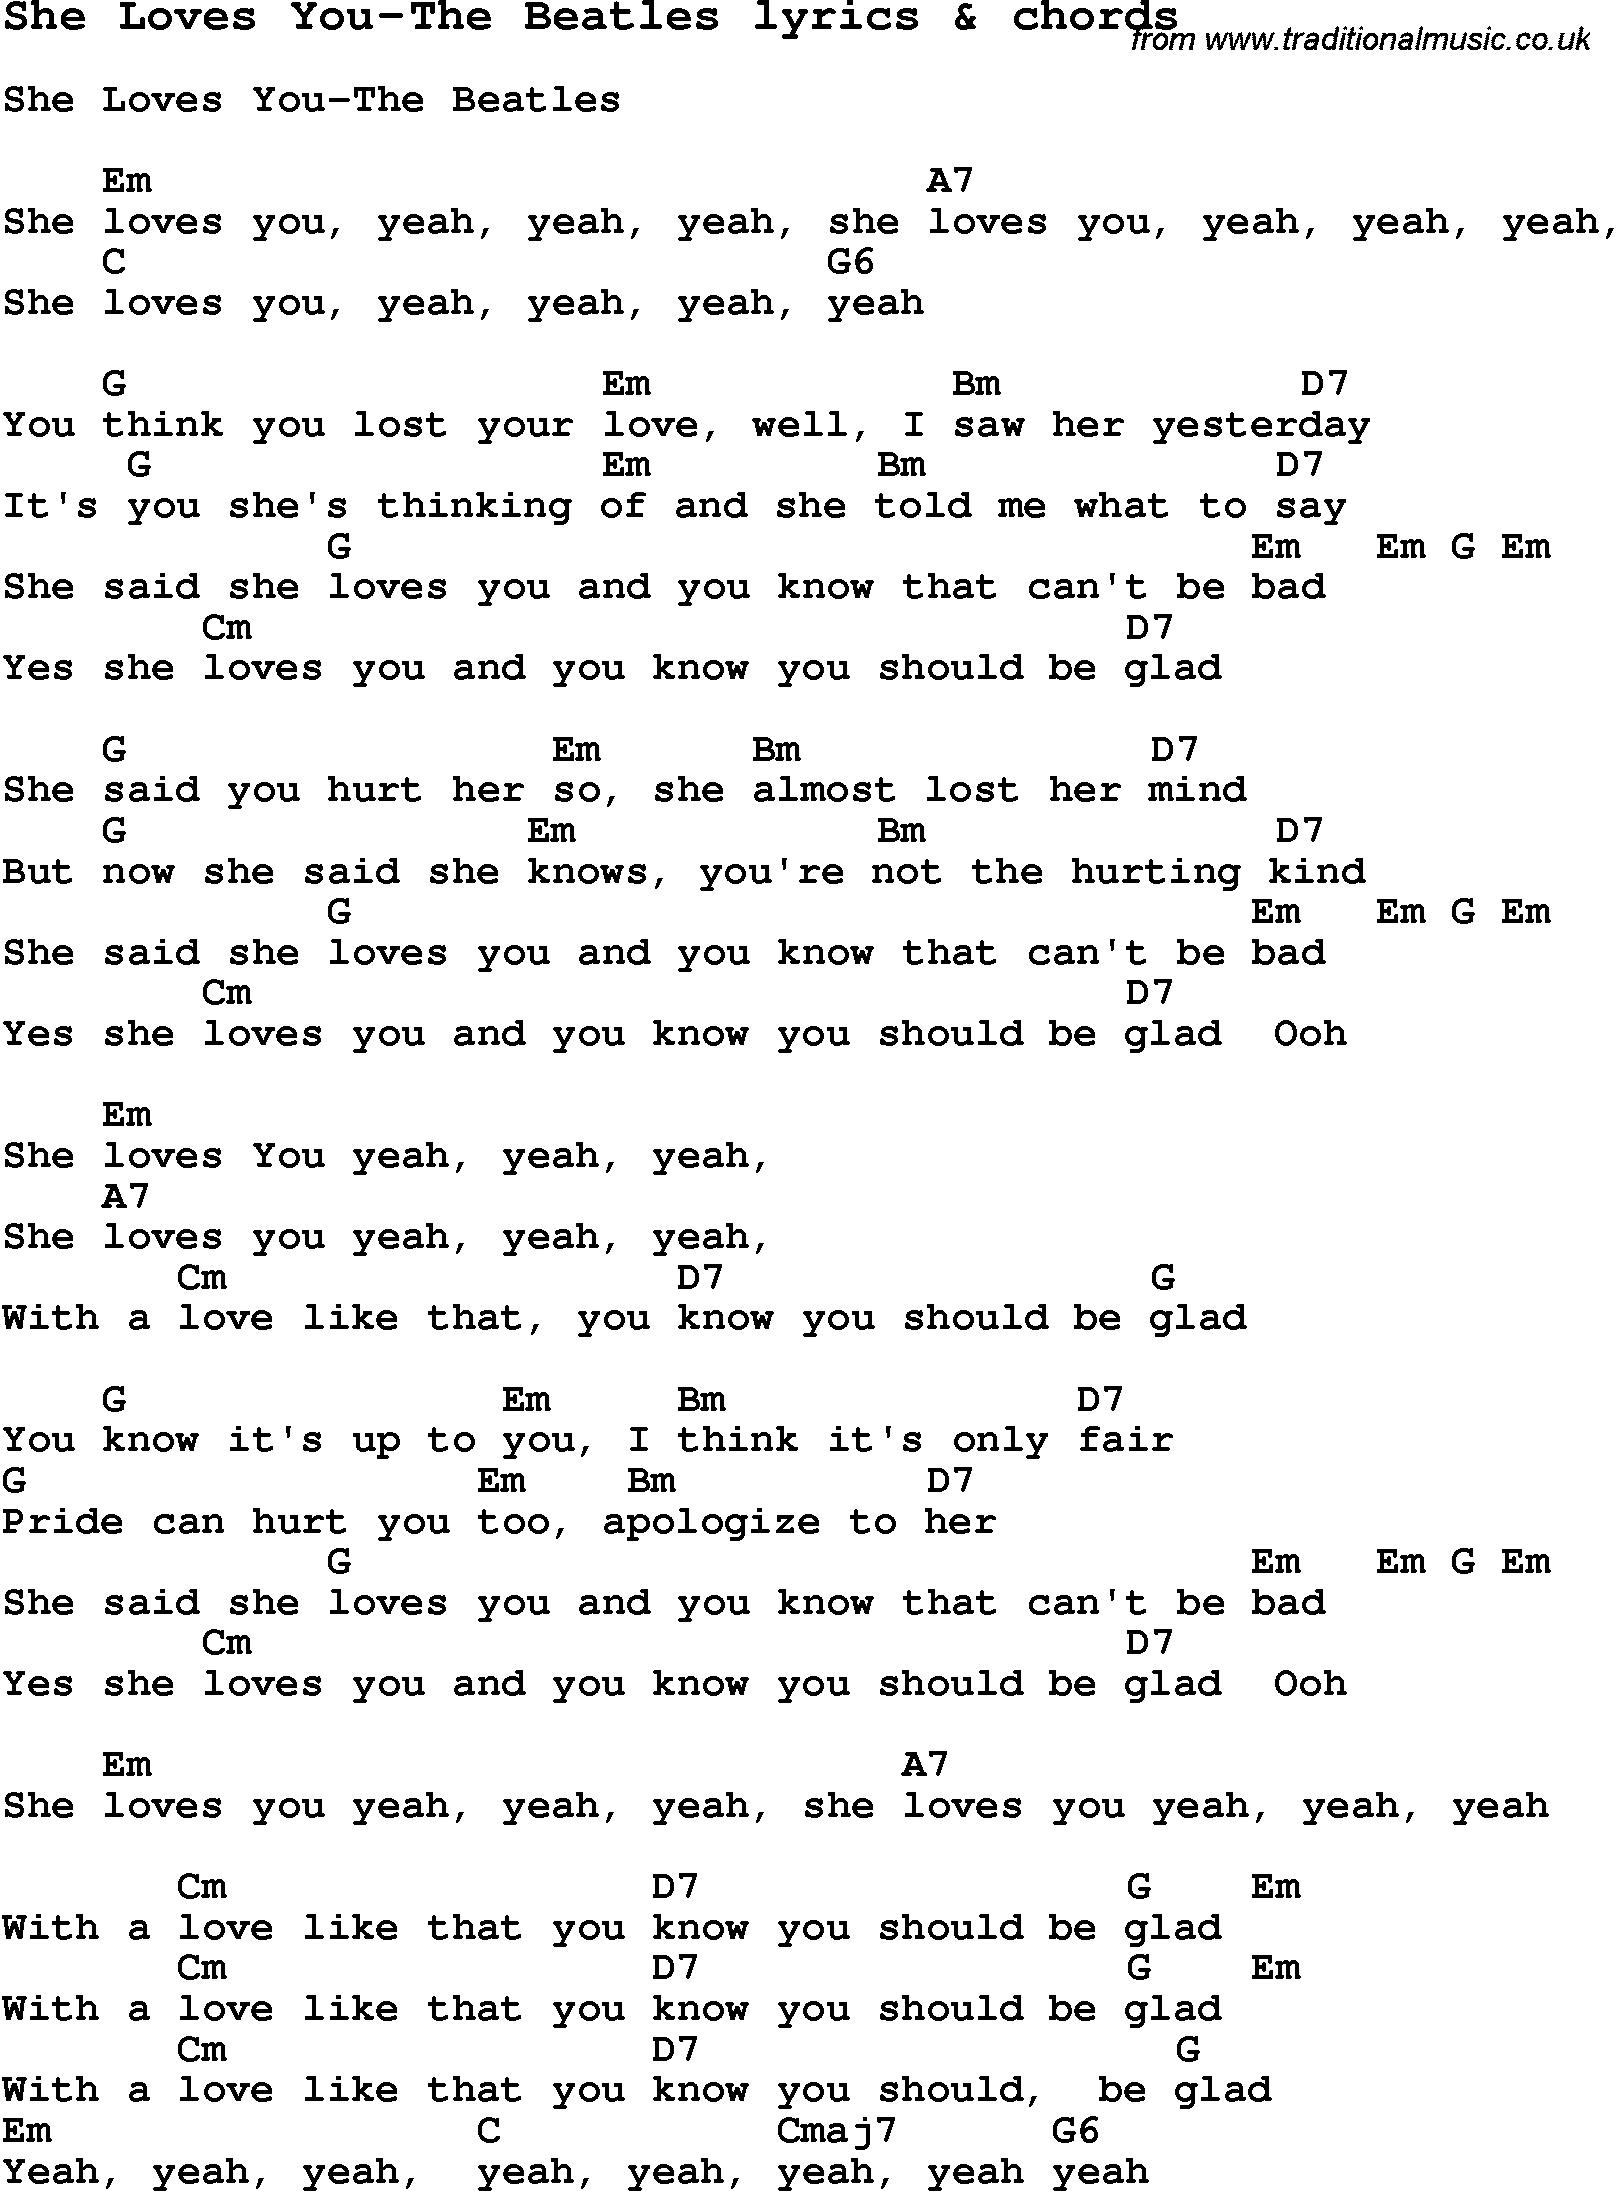 Love Song Lyrics for: She Loves You-The Beatles with chords for Ukulele, Guitar Banjo etc.